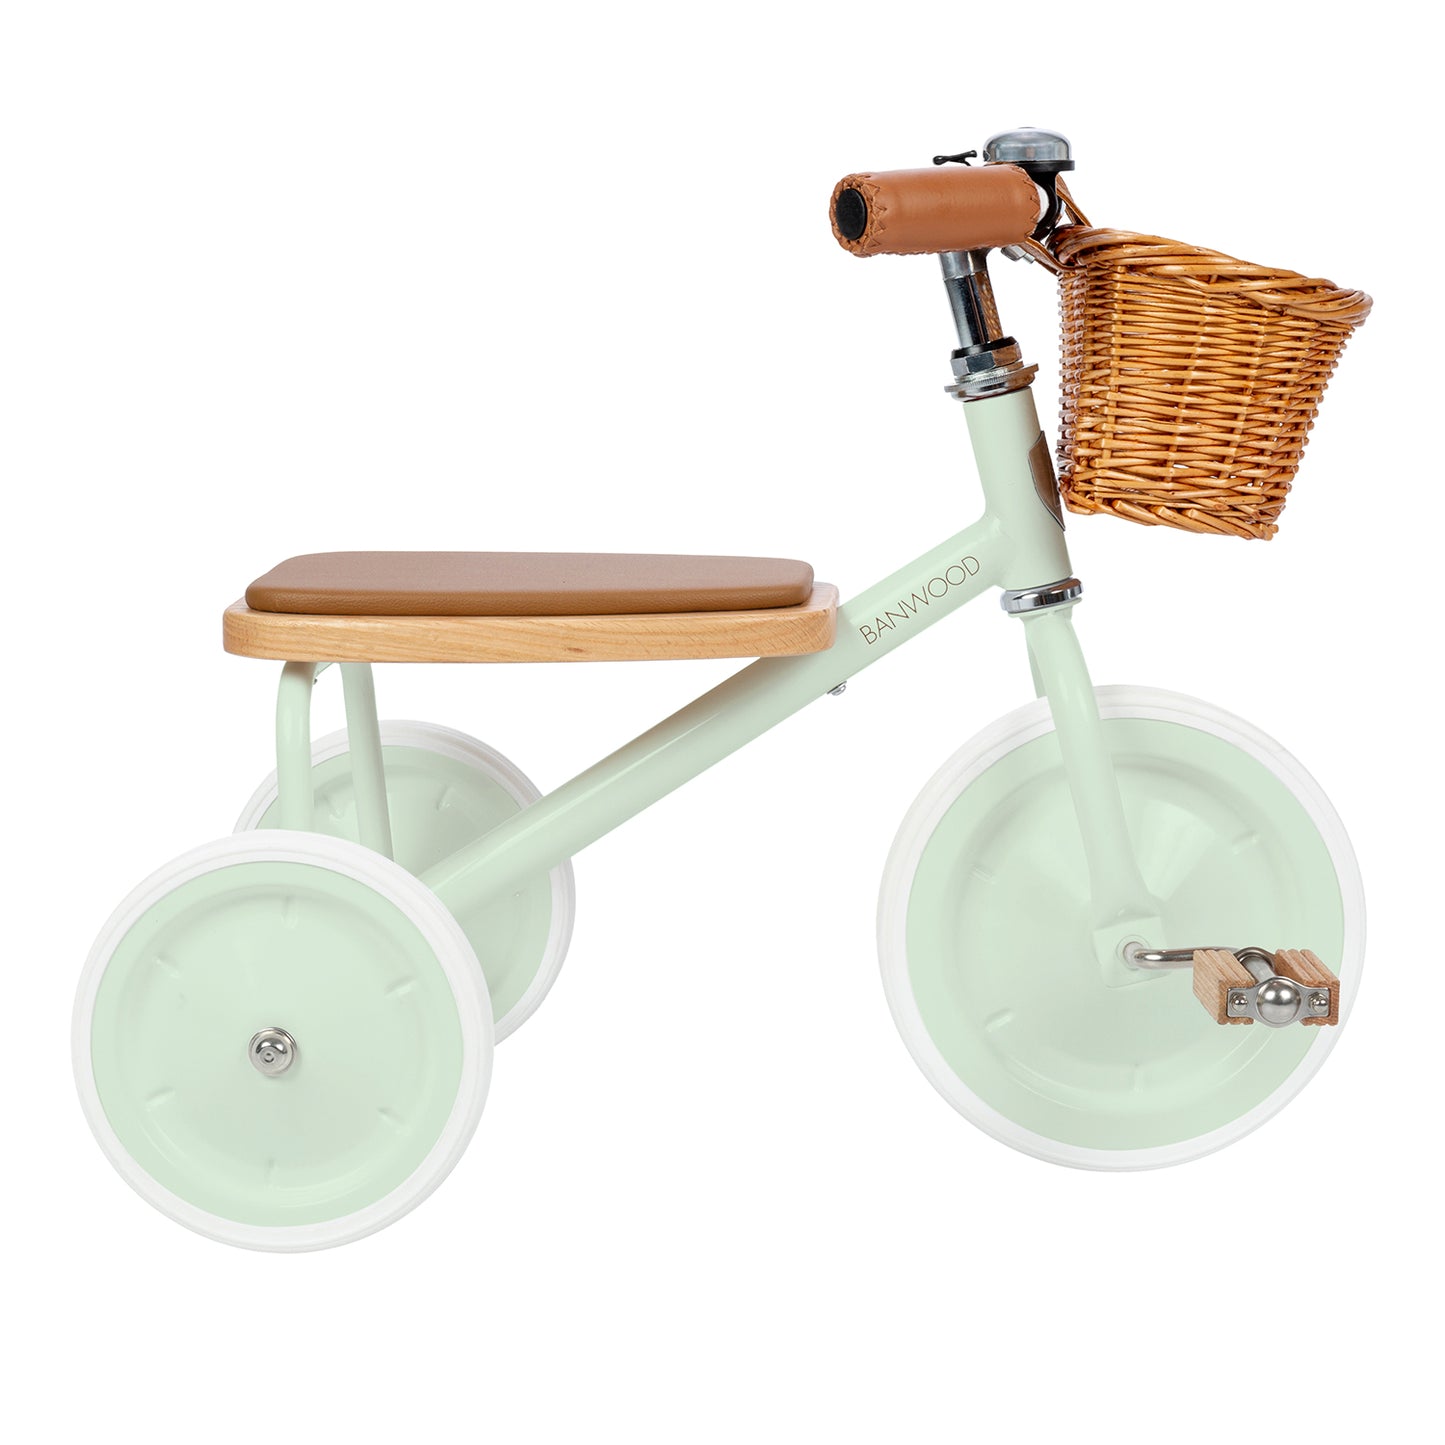 Banwood Trike - Age 2+